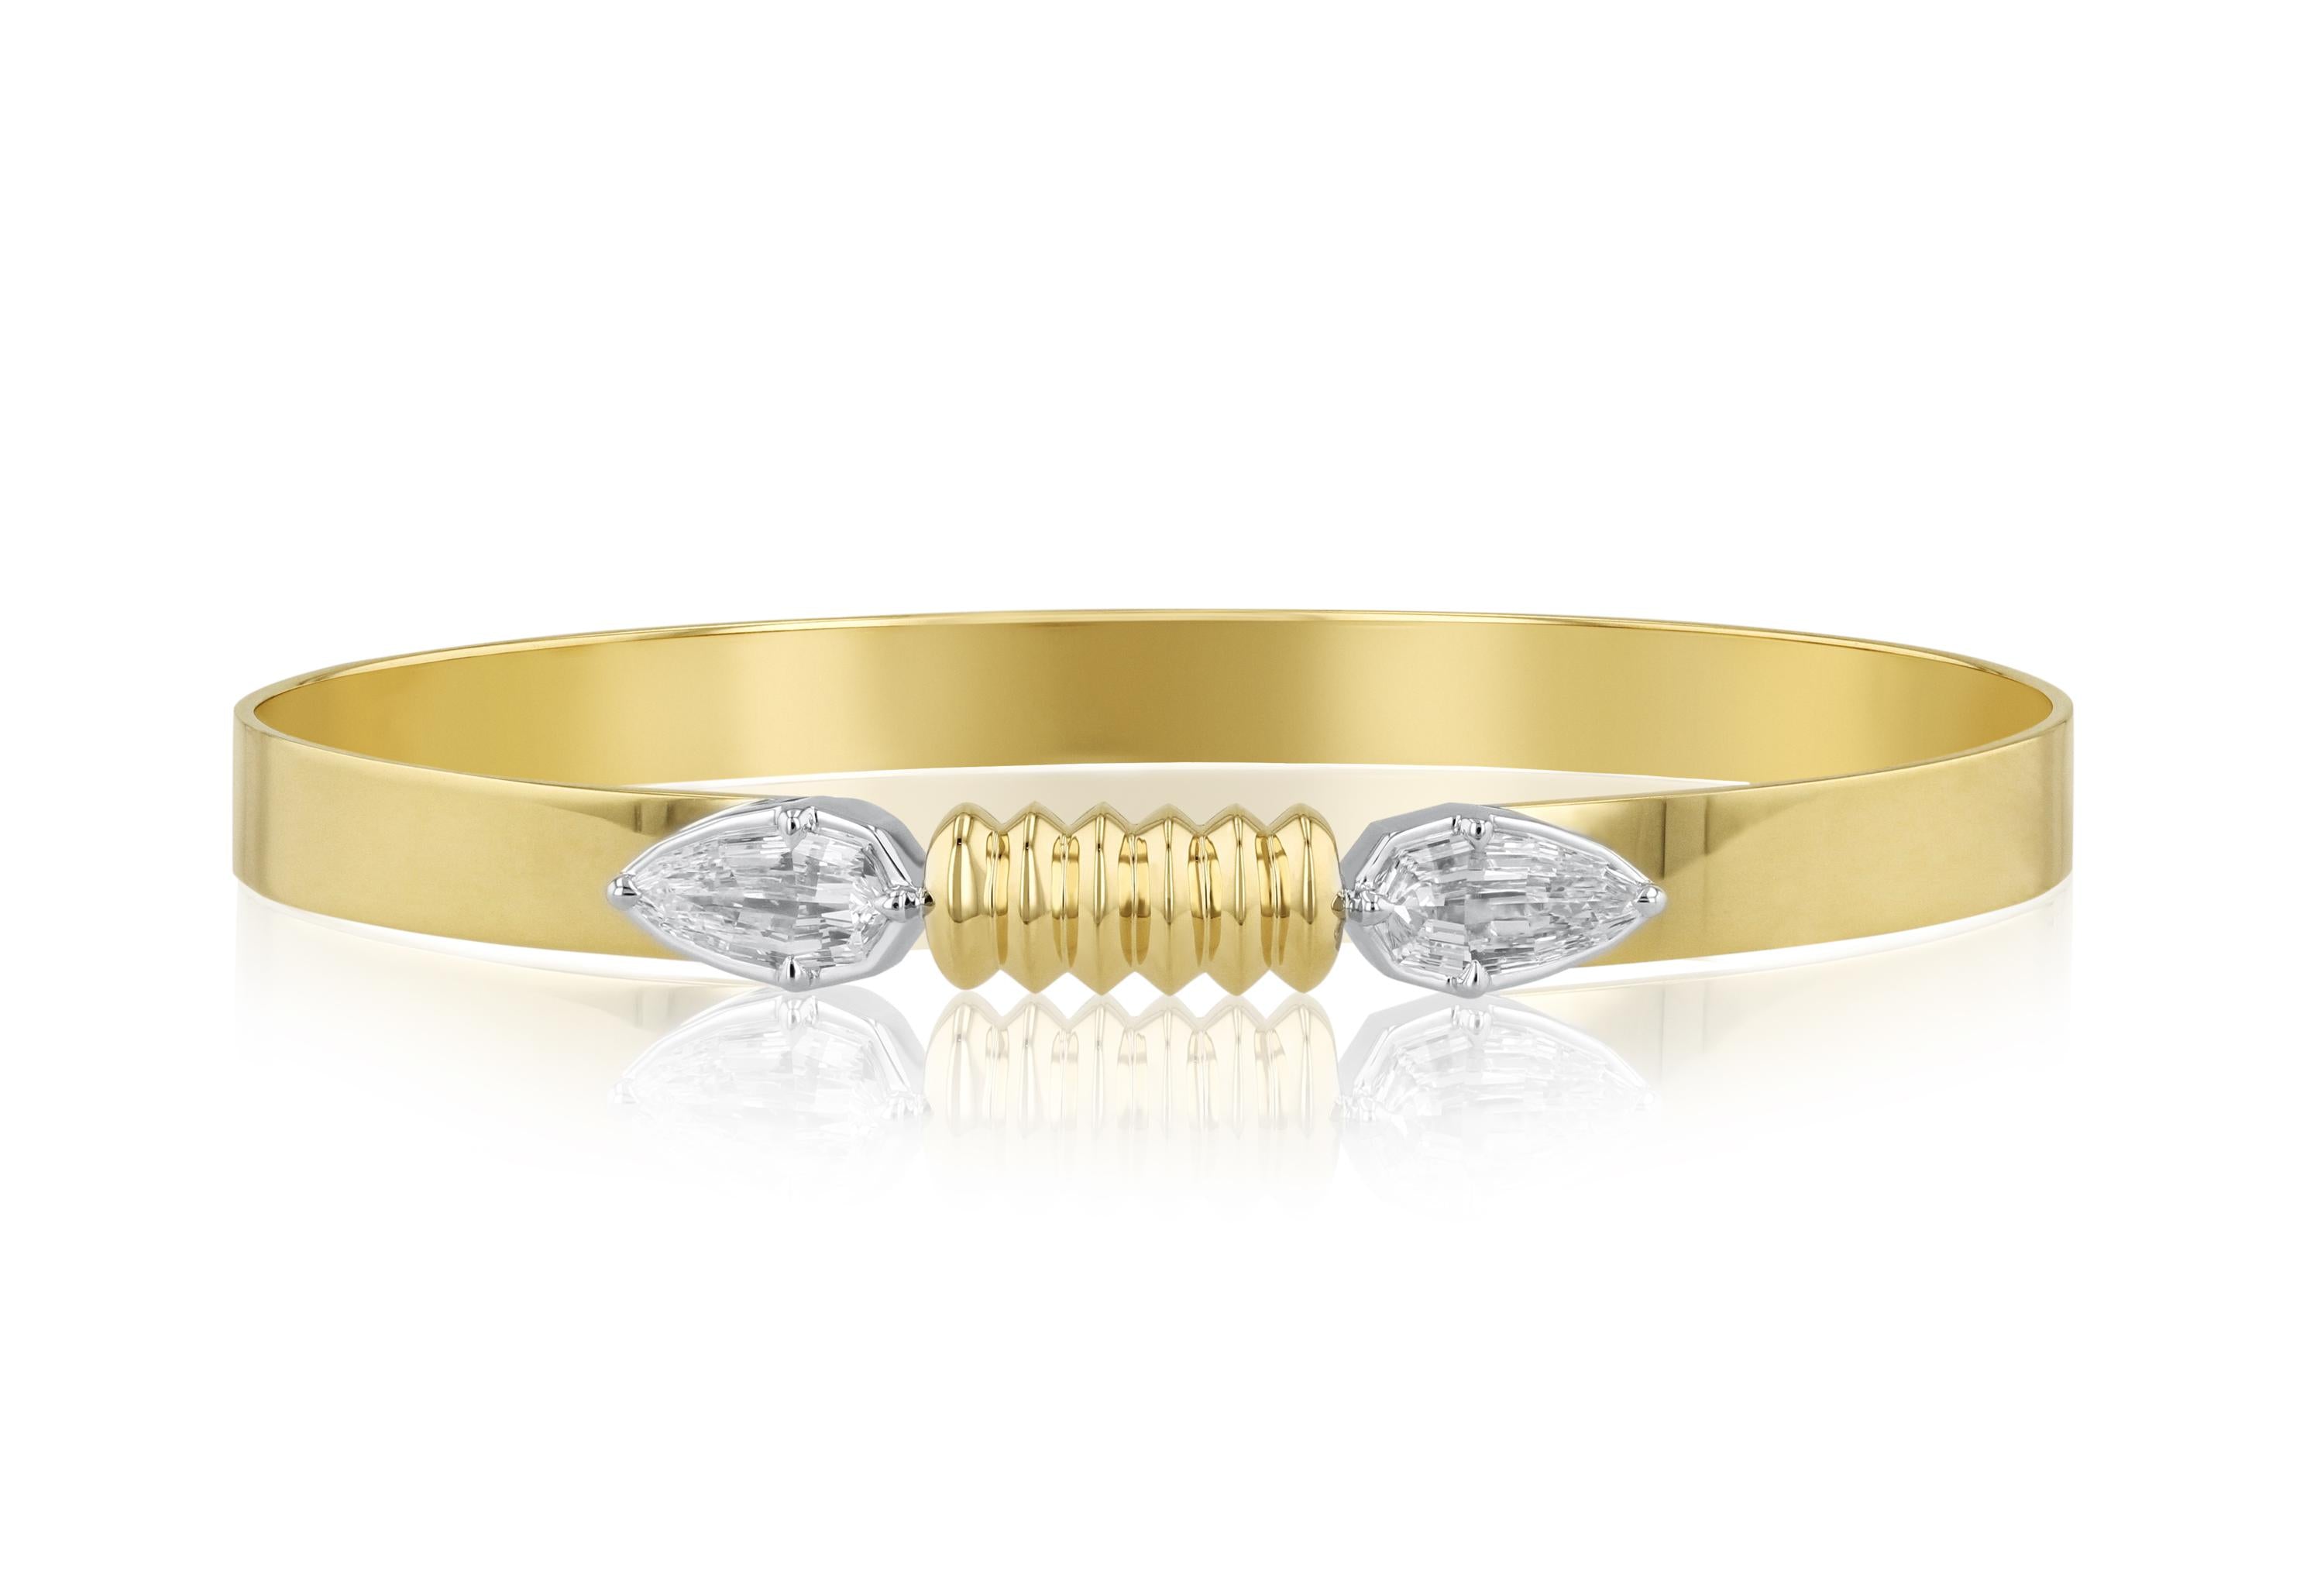 Phillips House 18k Yellow Gold Diamond Bracelet